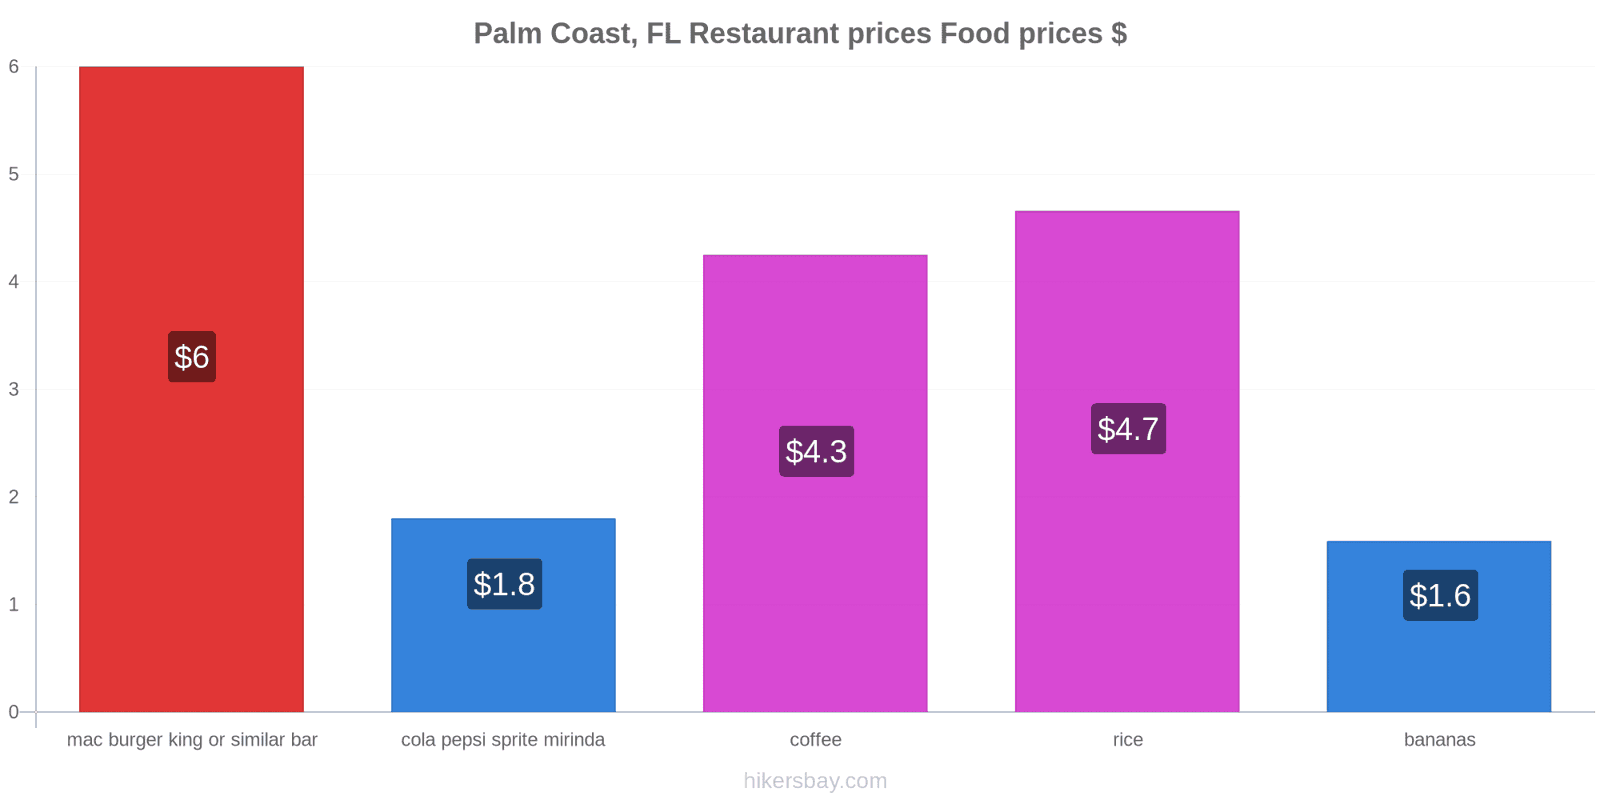 Palm Coast, FL price changes hikersbay.com